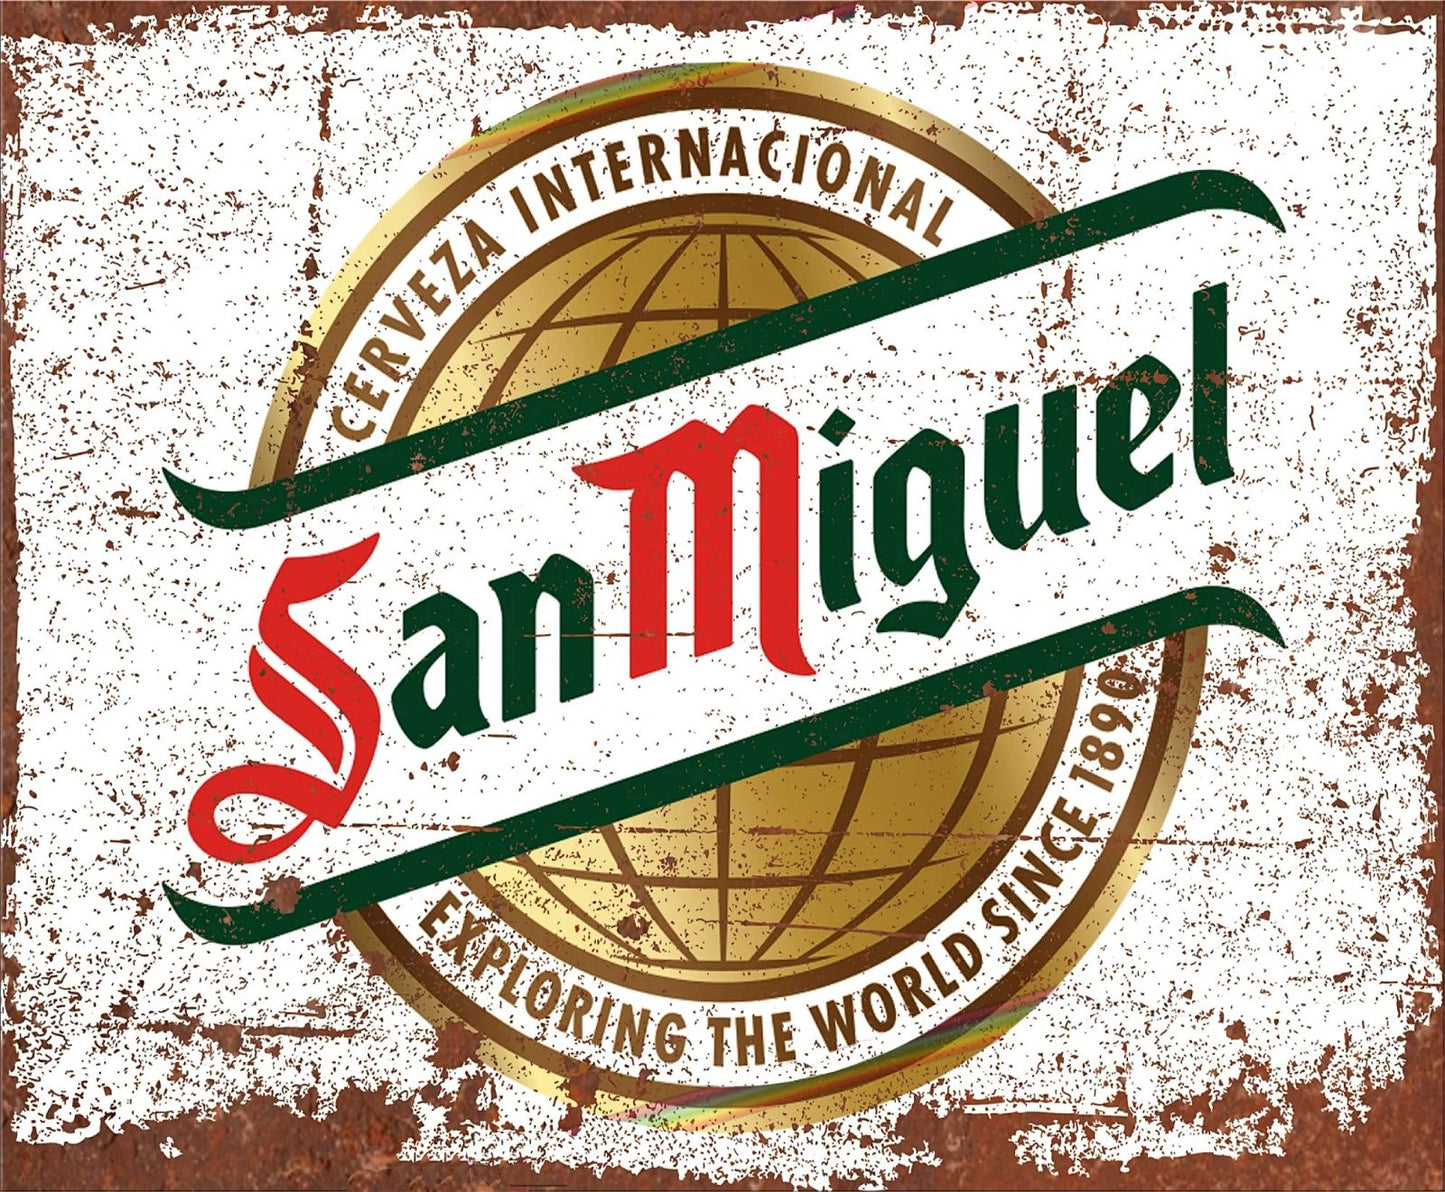 Small Metal Sign 45 x 37.5cm Beer San Miguel